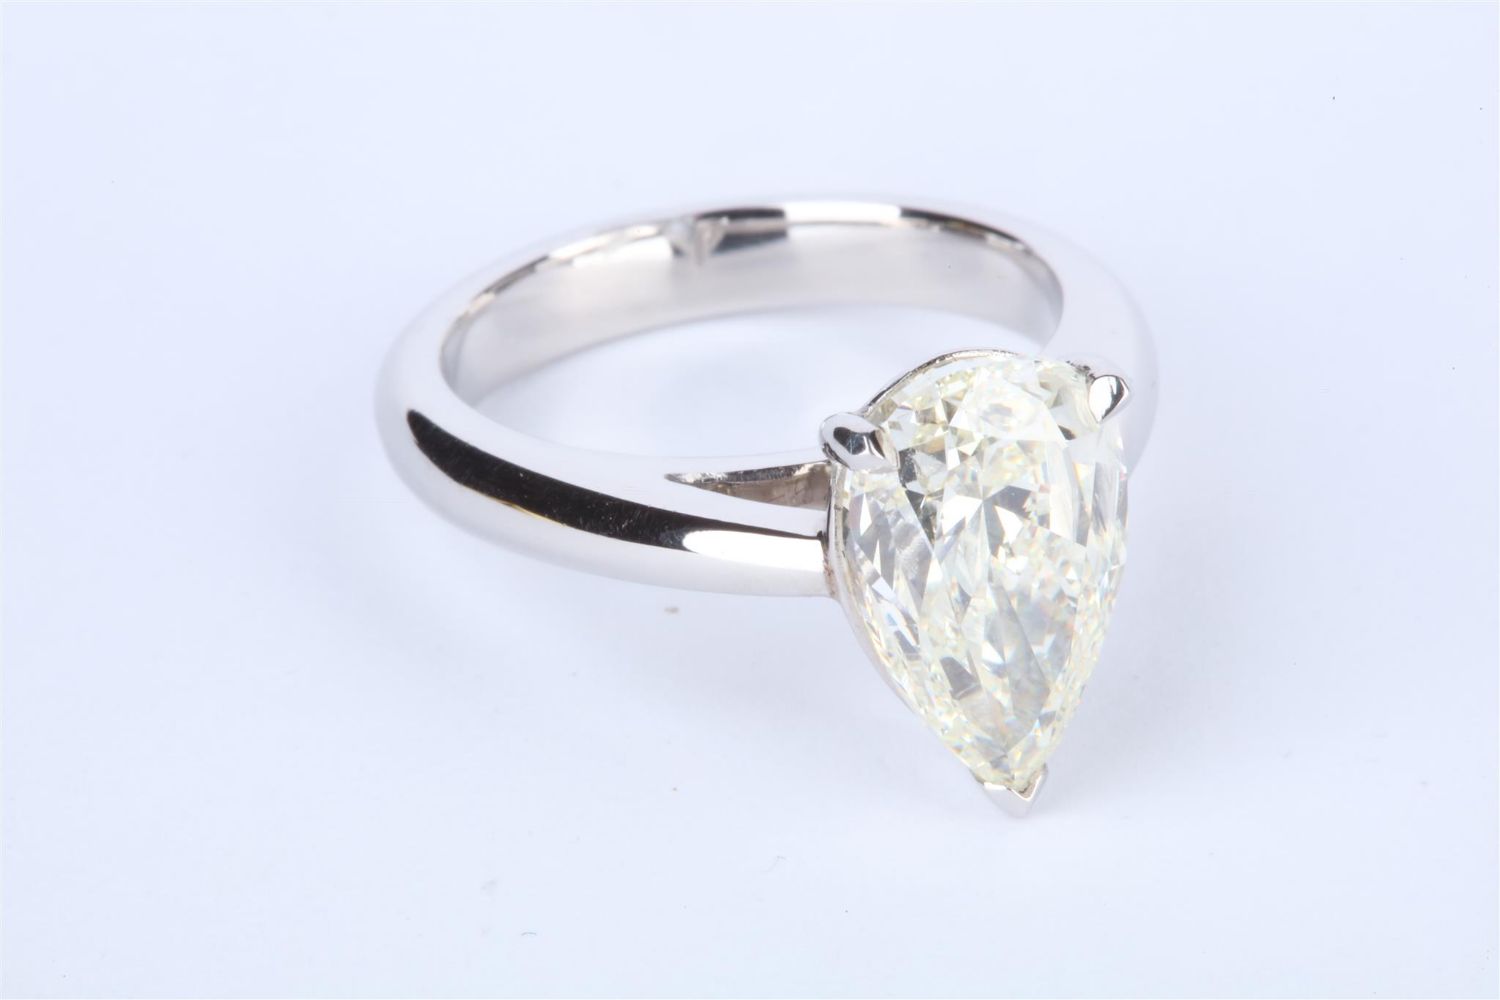 Stunning Diamond Jewellery, Rolex Ladies Date, Sovereigns, Precious Metals, Designer Cartier & Tiffany Rings Plus More!